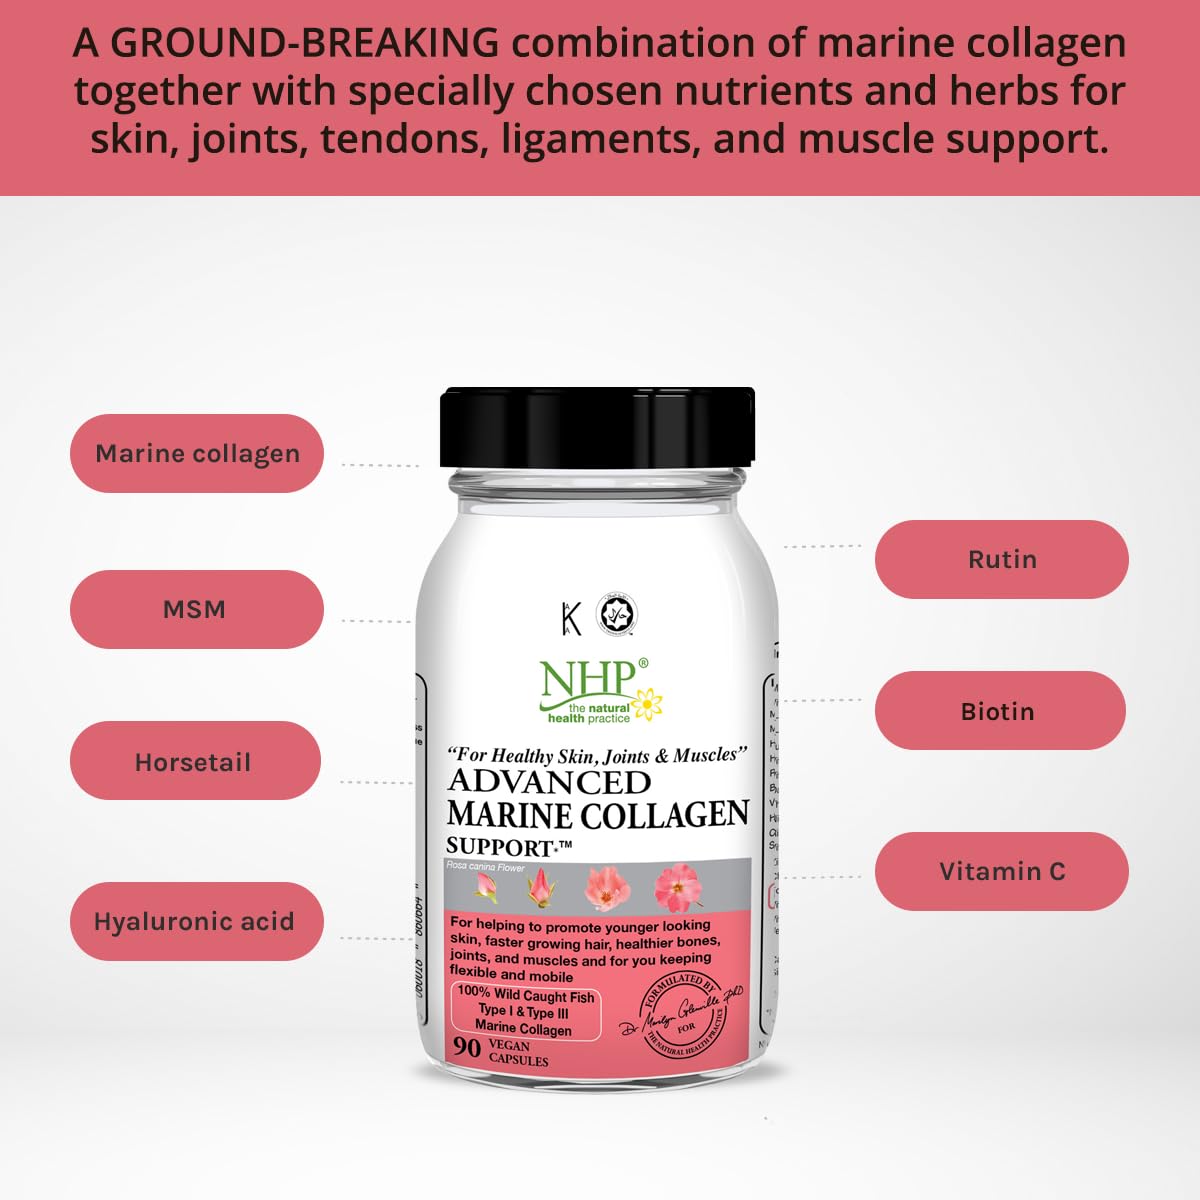 Advanced Marine Collagen Support, specifically Designed to Support Skin